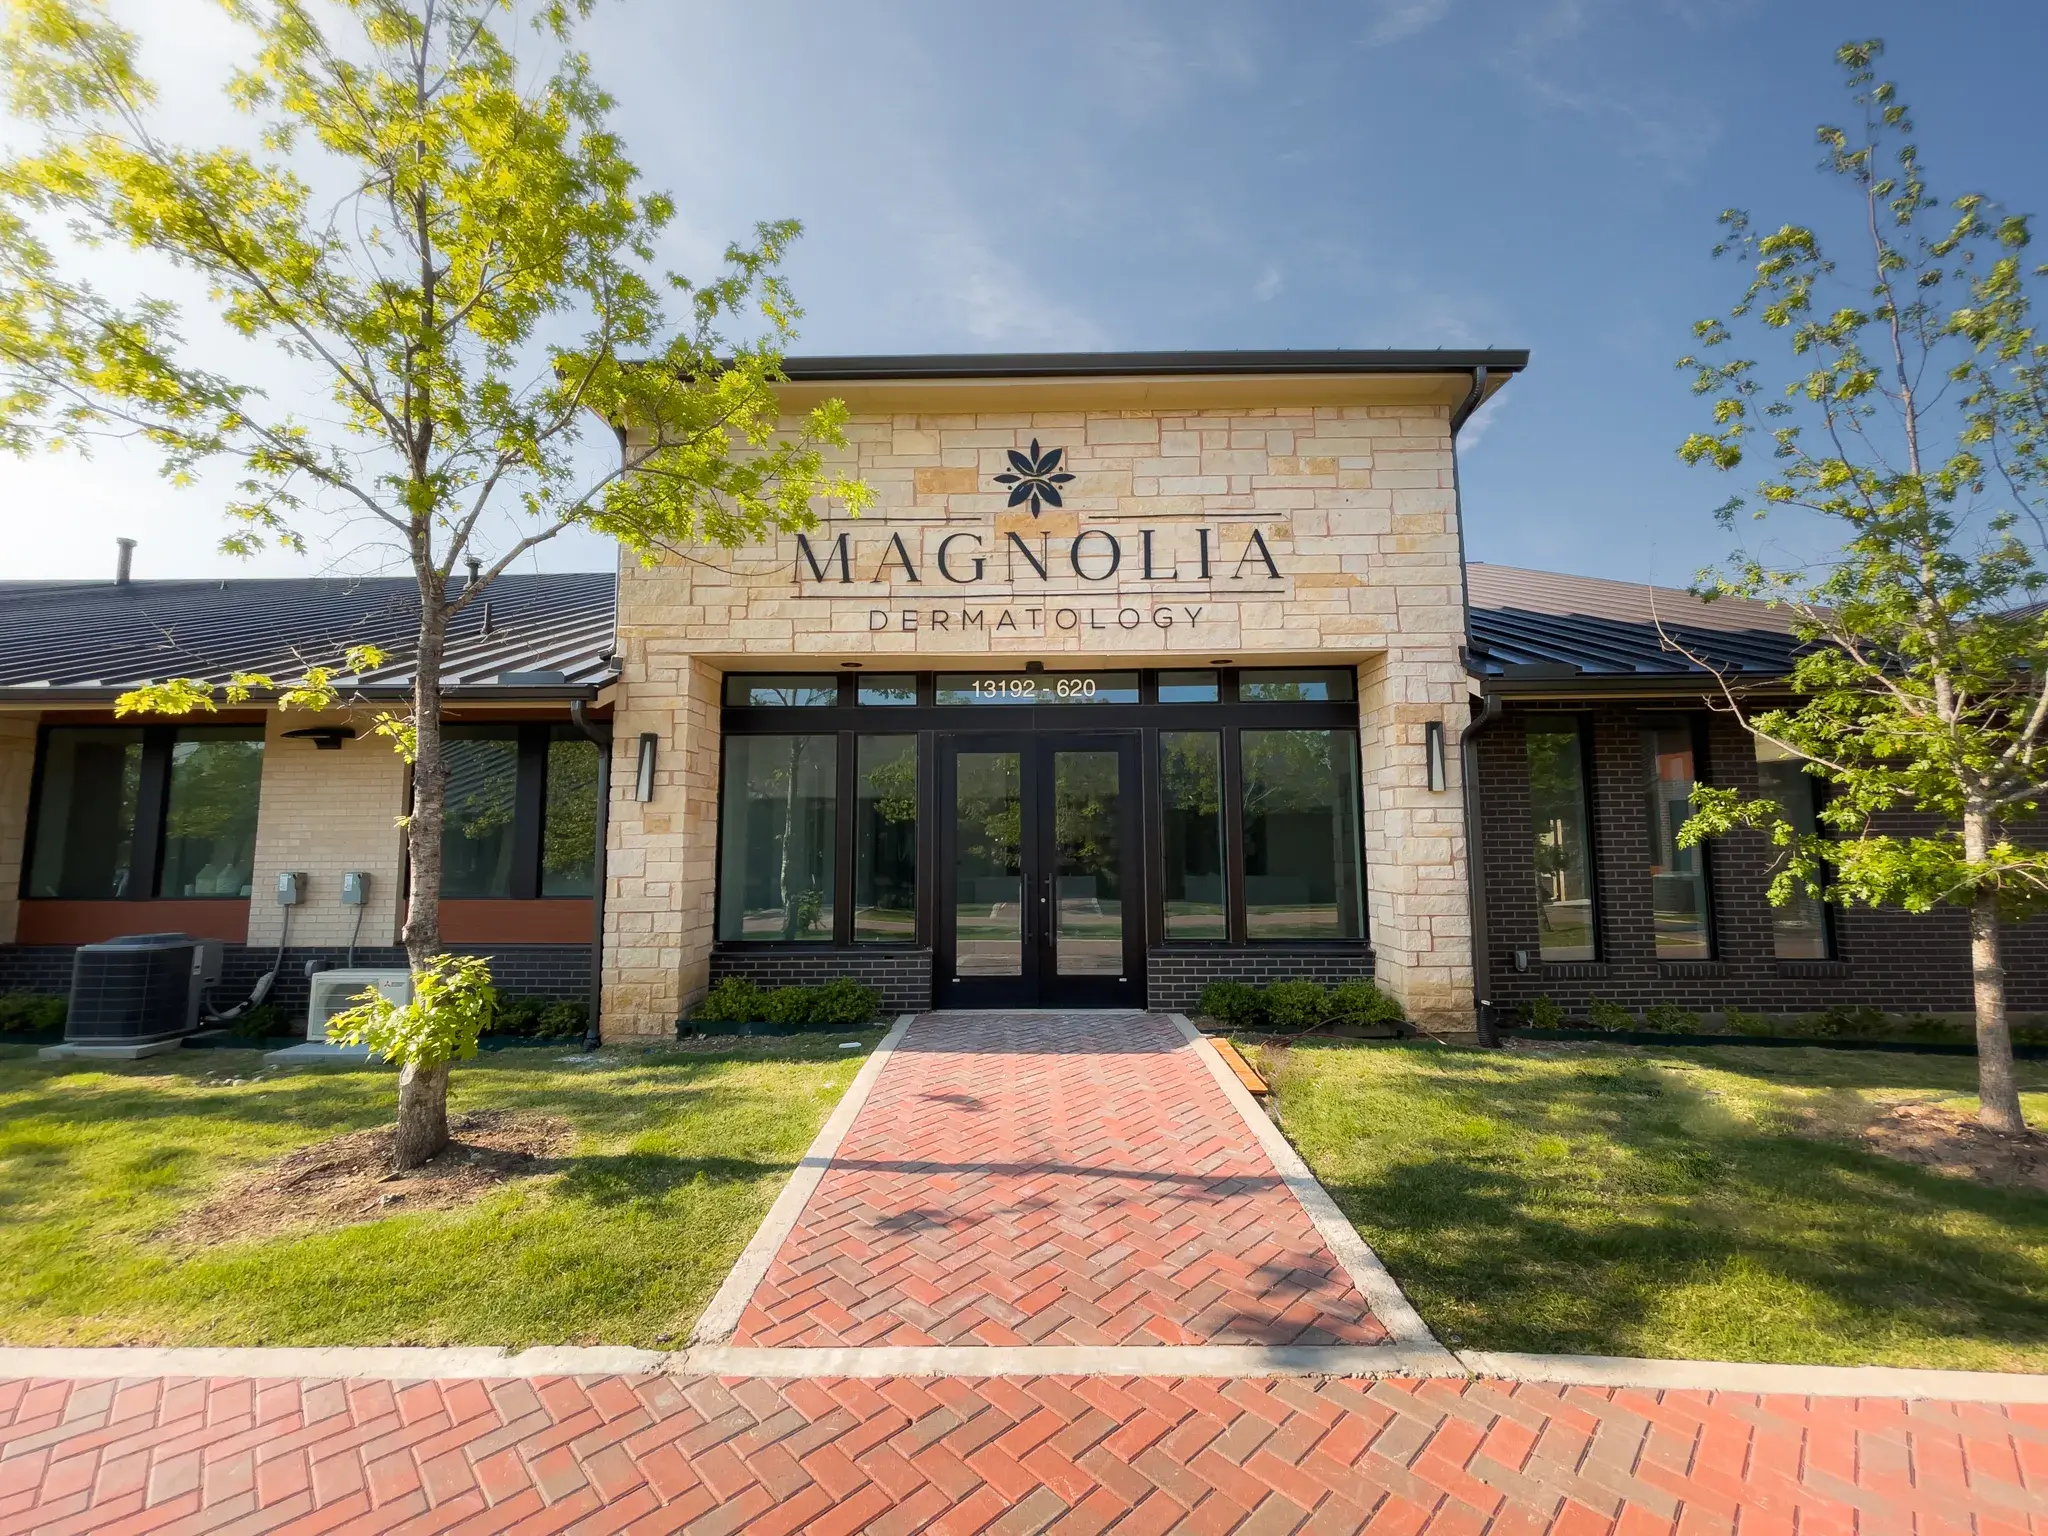 Magnolia Dermatology Entrance